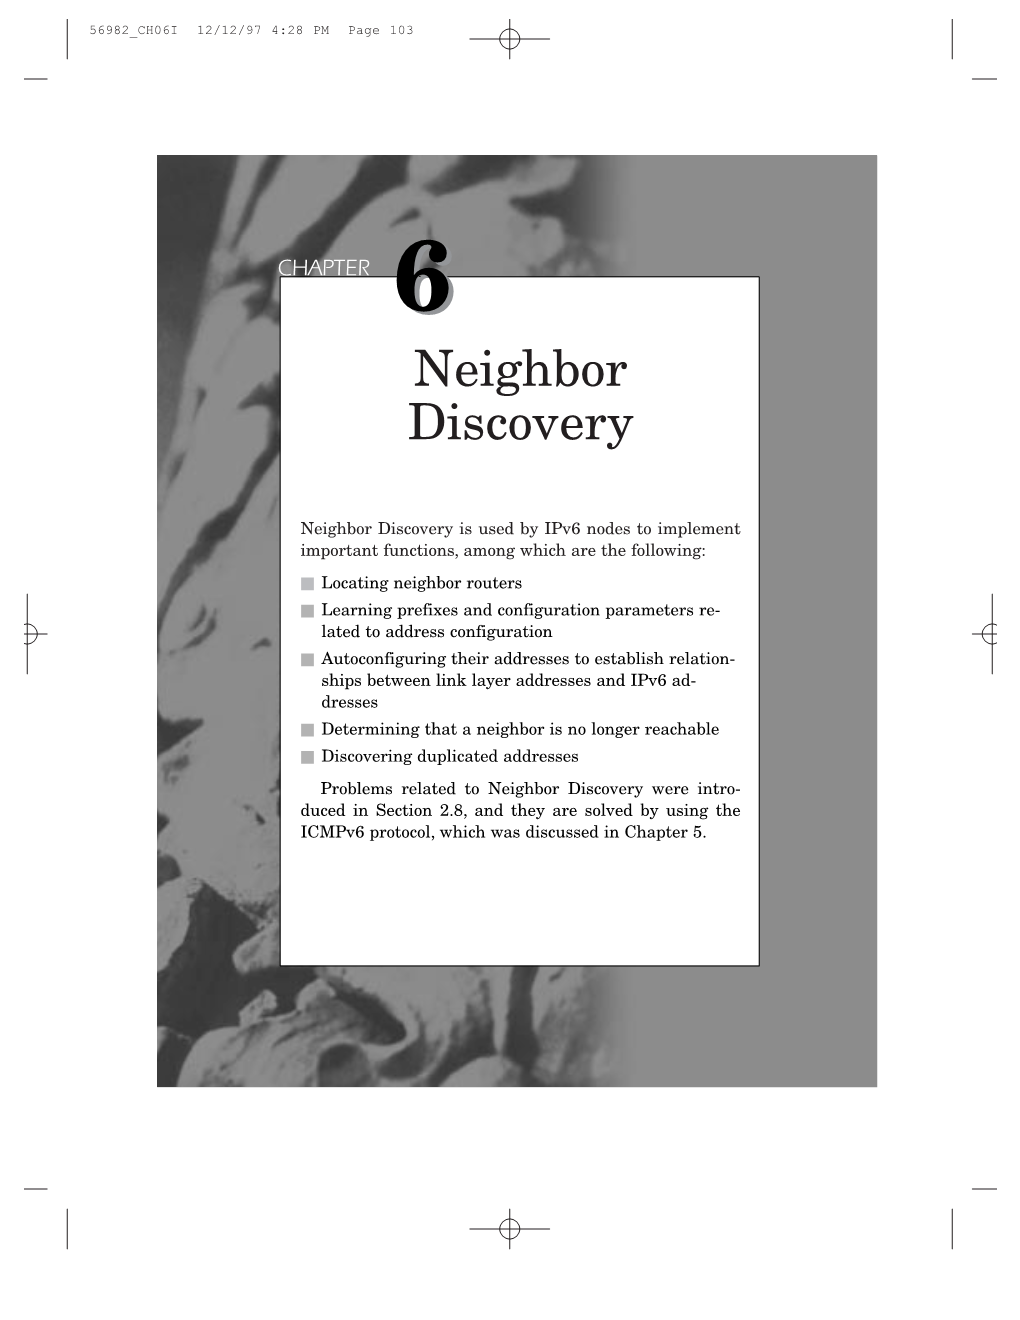 Neighbor Discovery